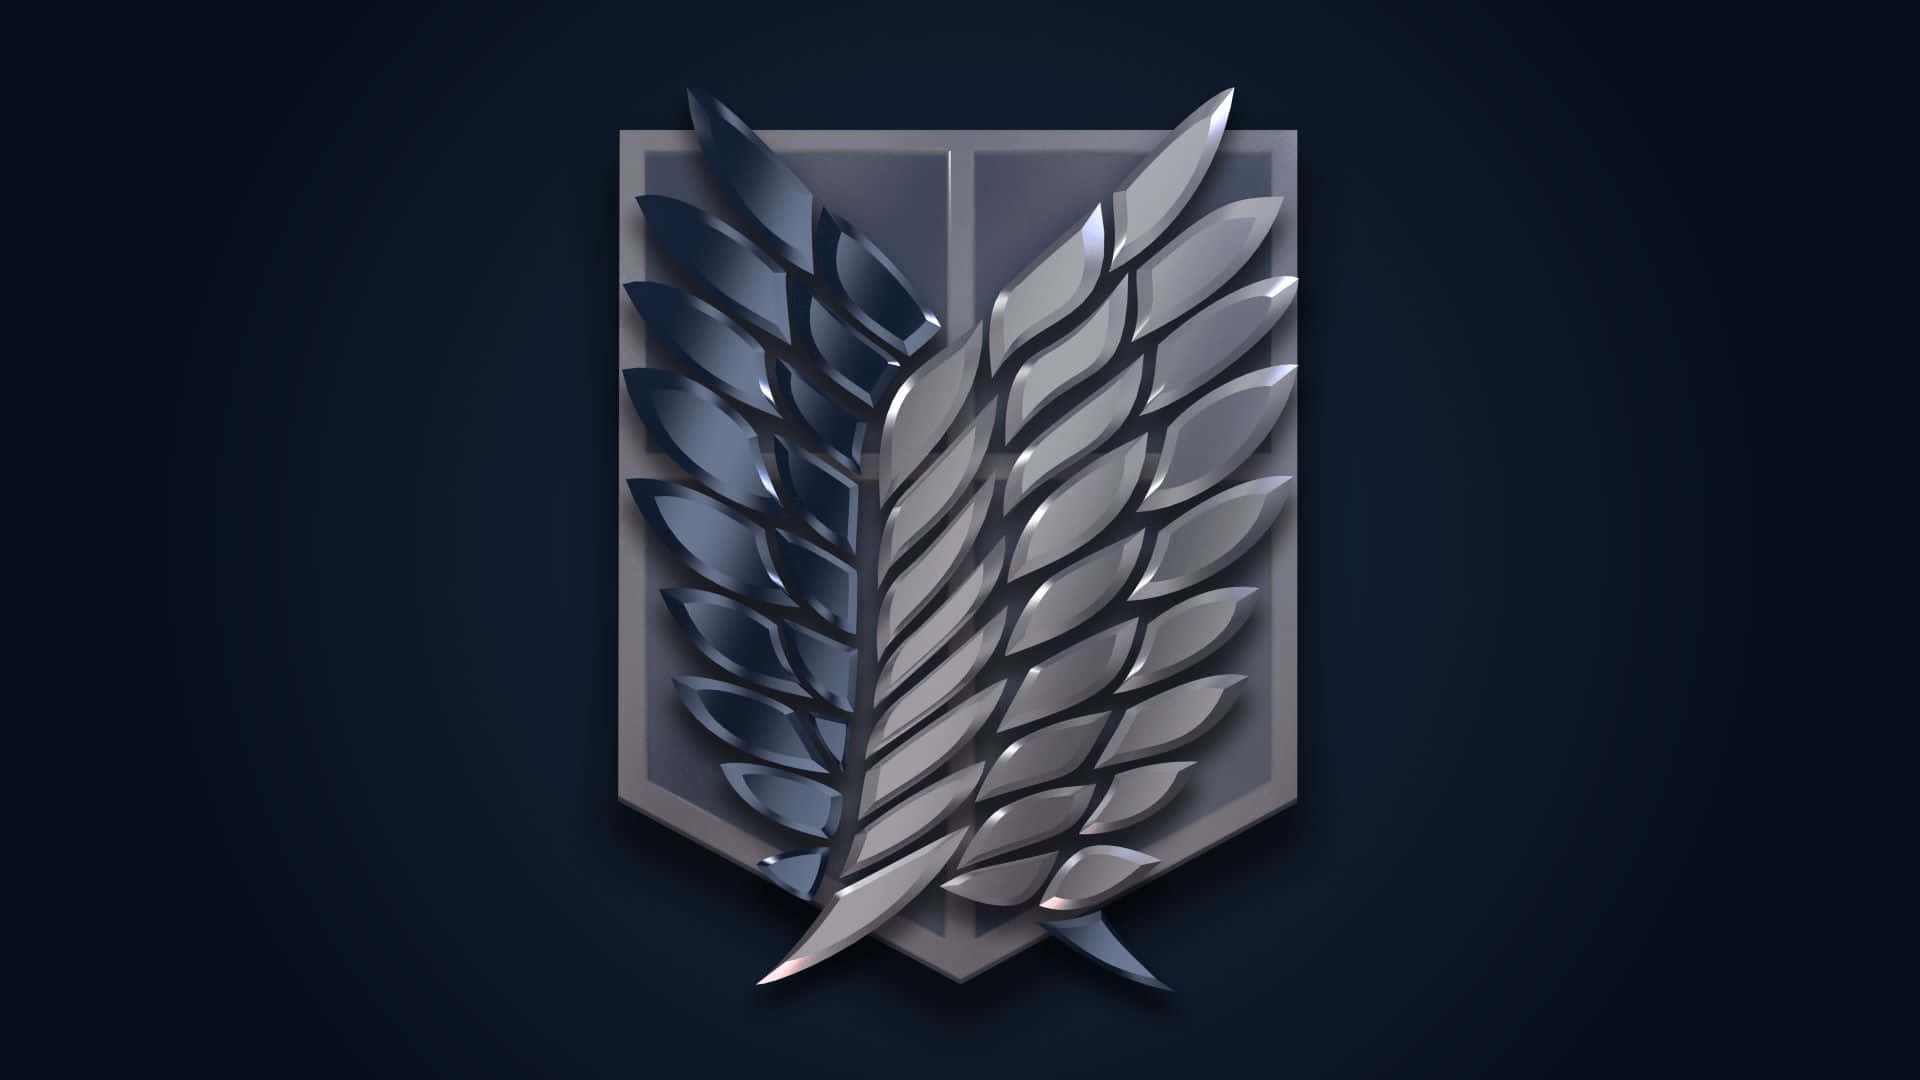 Attackon Titan Wingsof Freedom Emblem Background